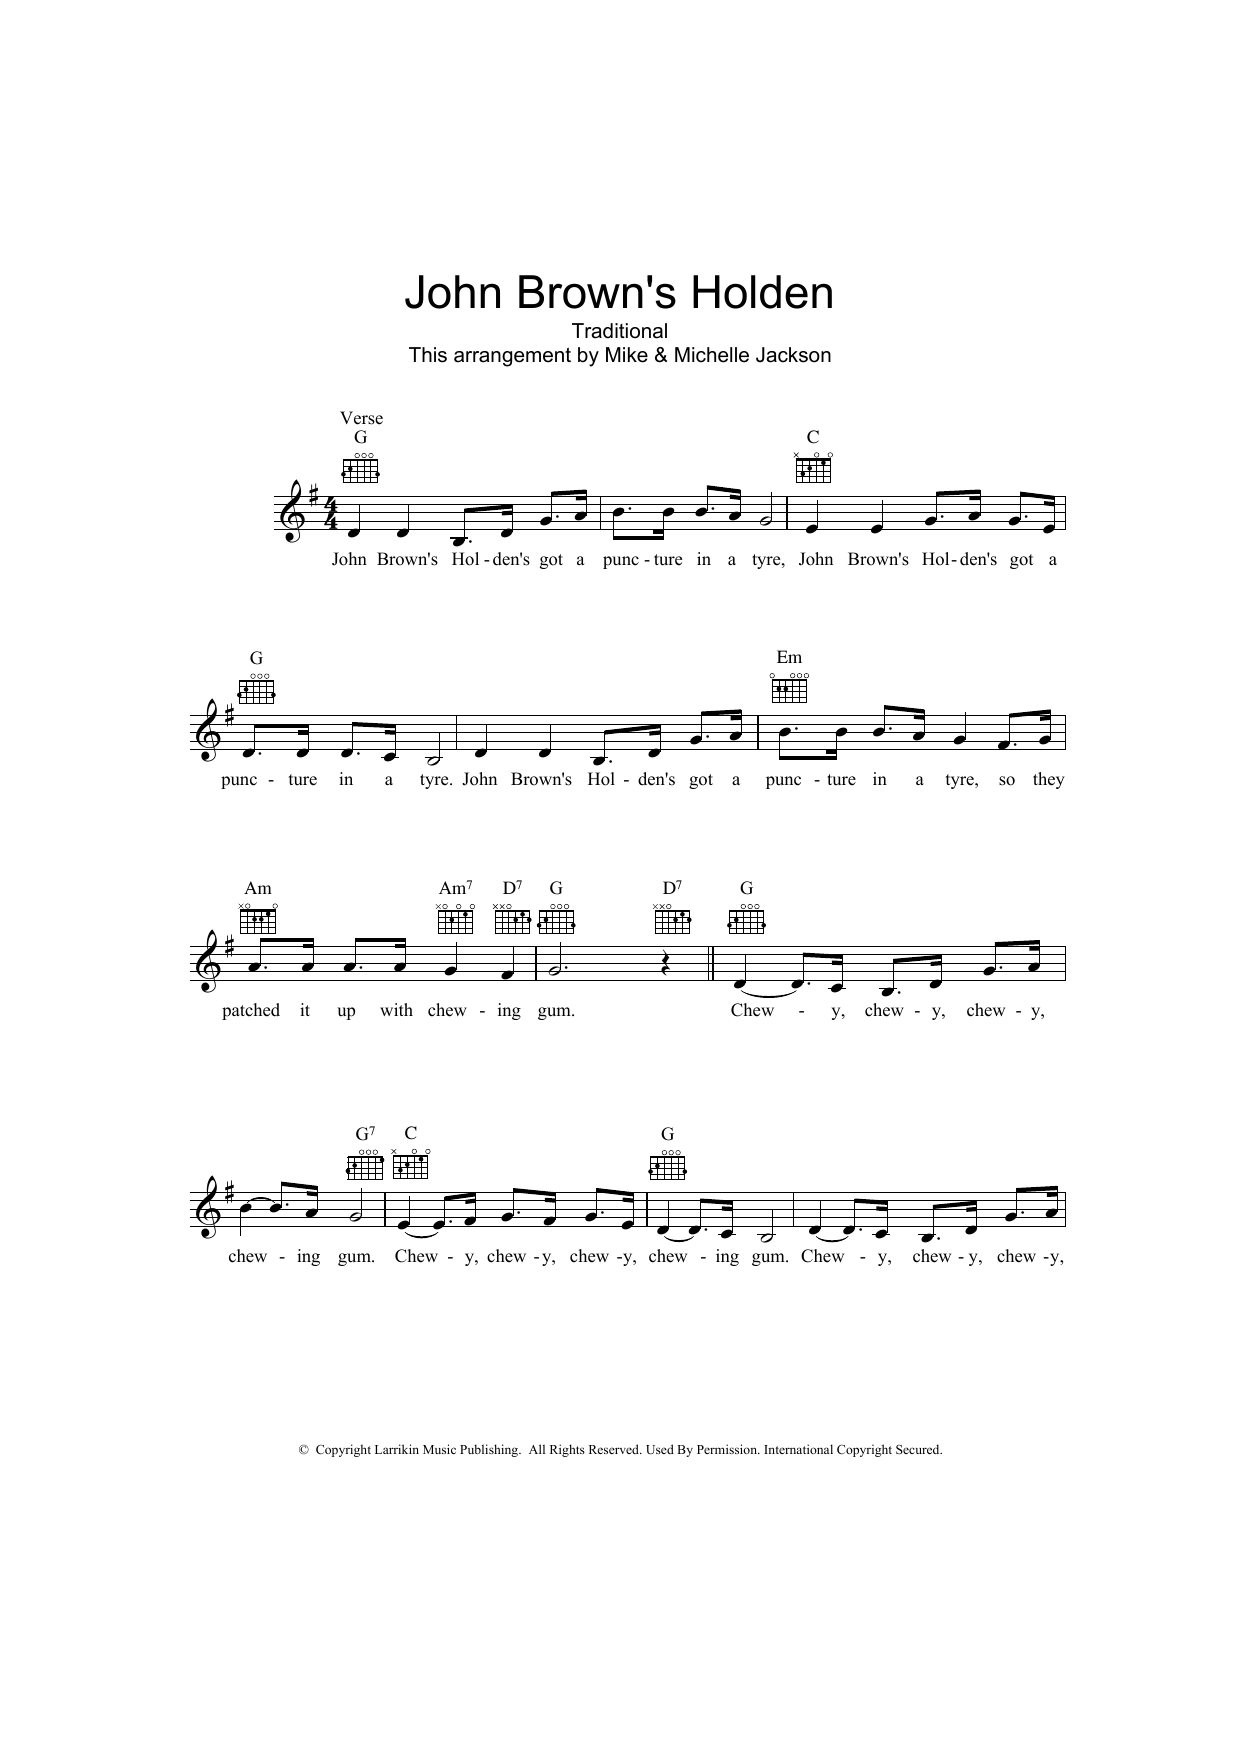 Download Traditional John Brown's Holden Sheet Music